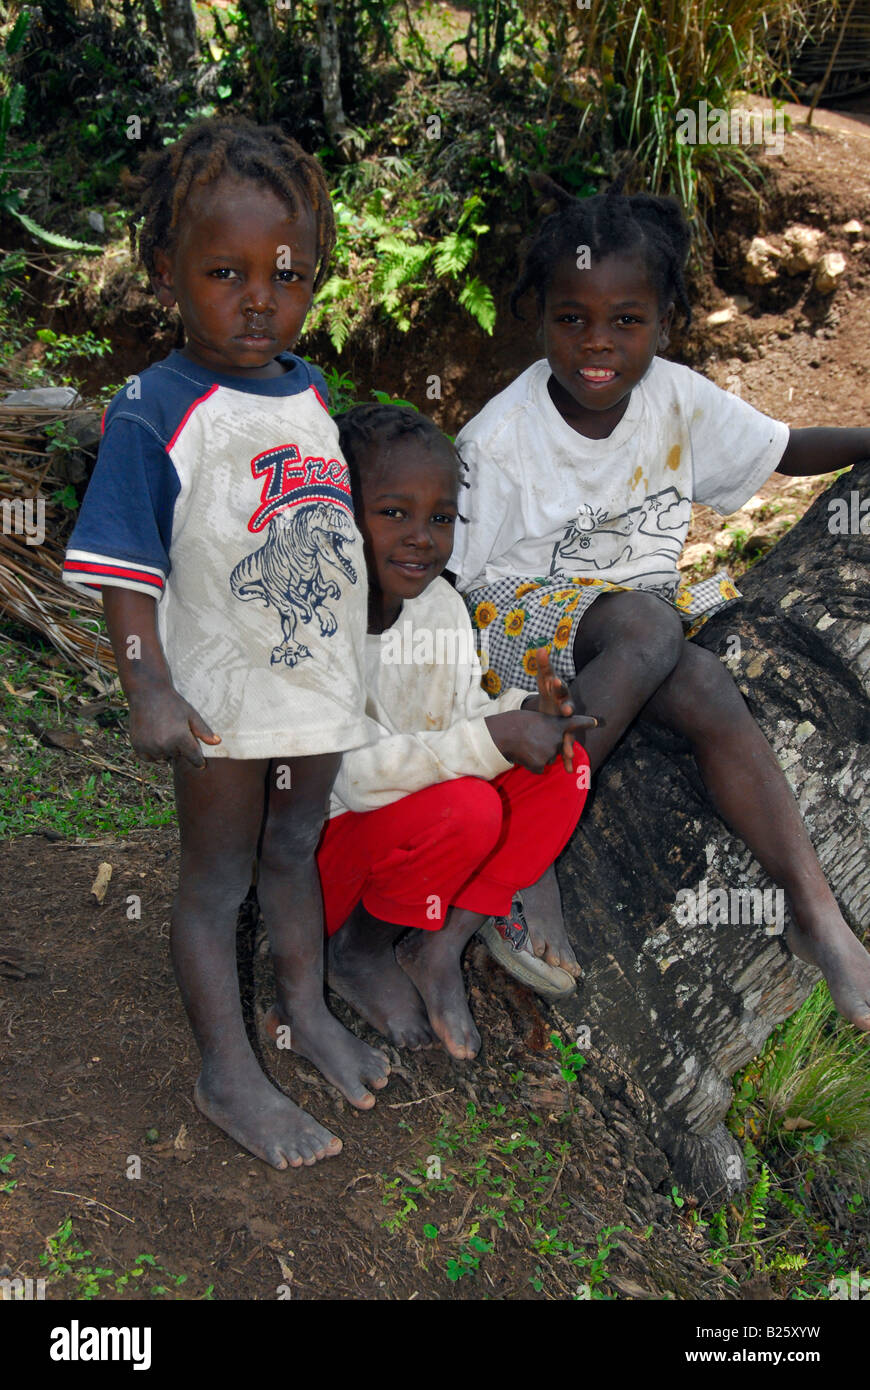 Dorf-Kinder in der Nähe der Zitadelle, Milot, Haiti Stockfotografie - Alamy